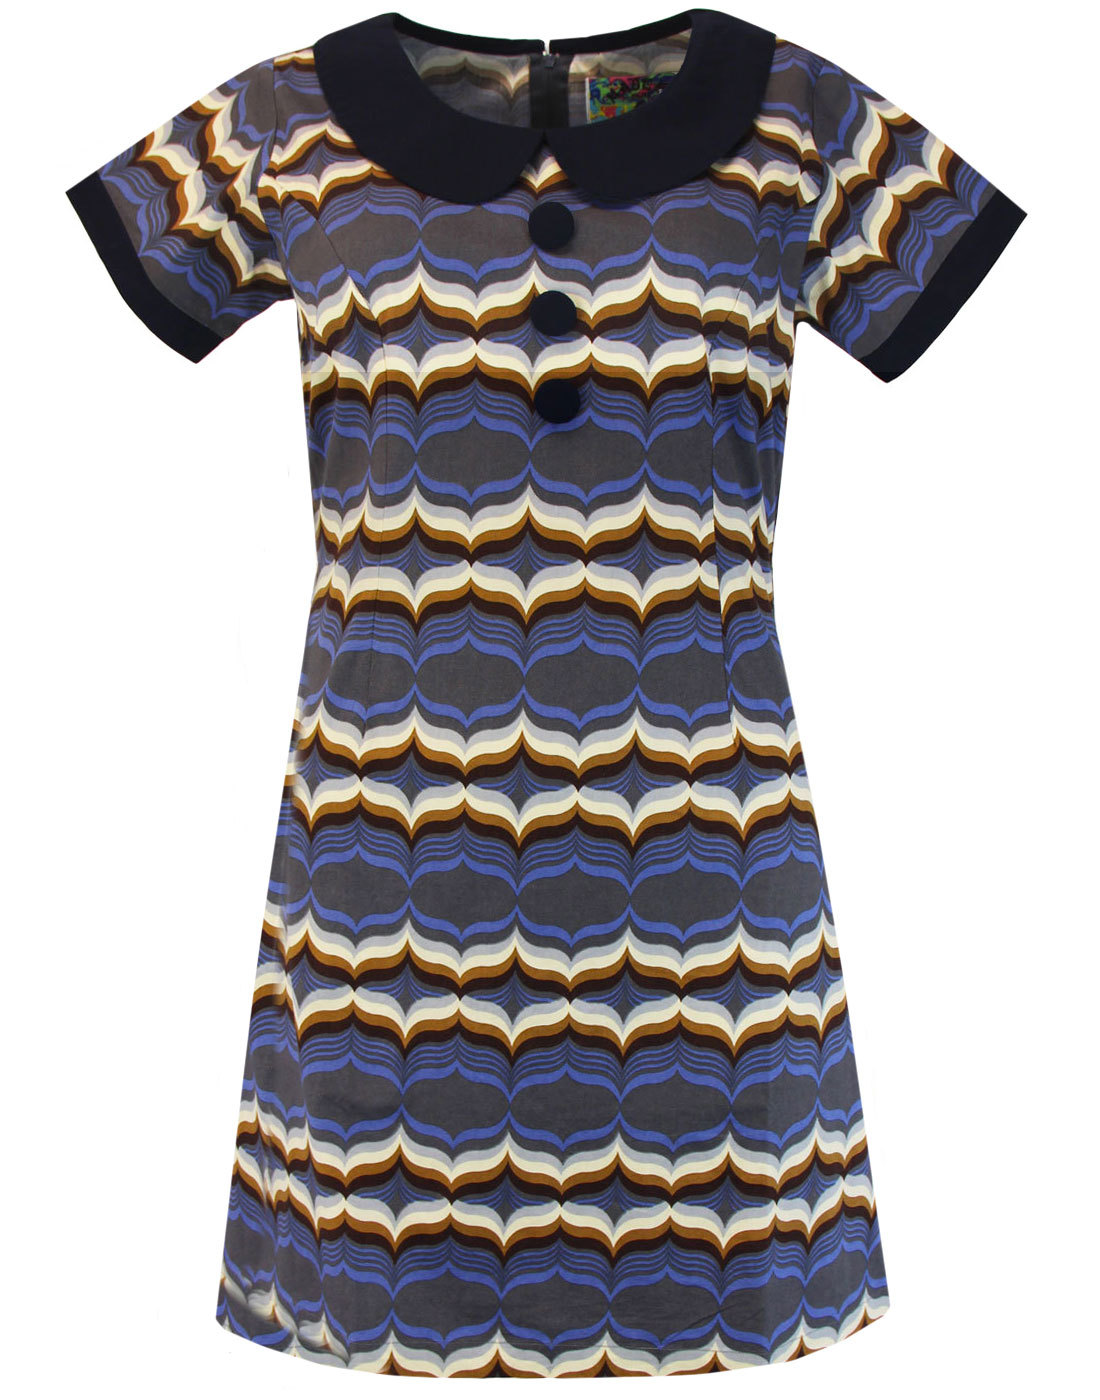 Dollierocker Waves MADCAP ENGLAND 60s Mod Dress